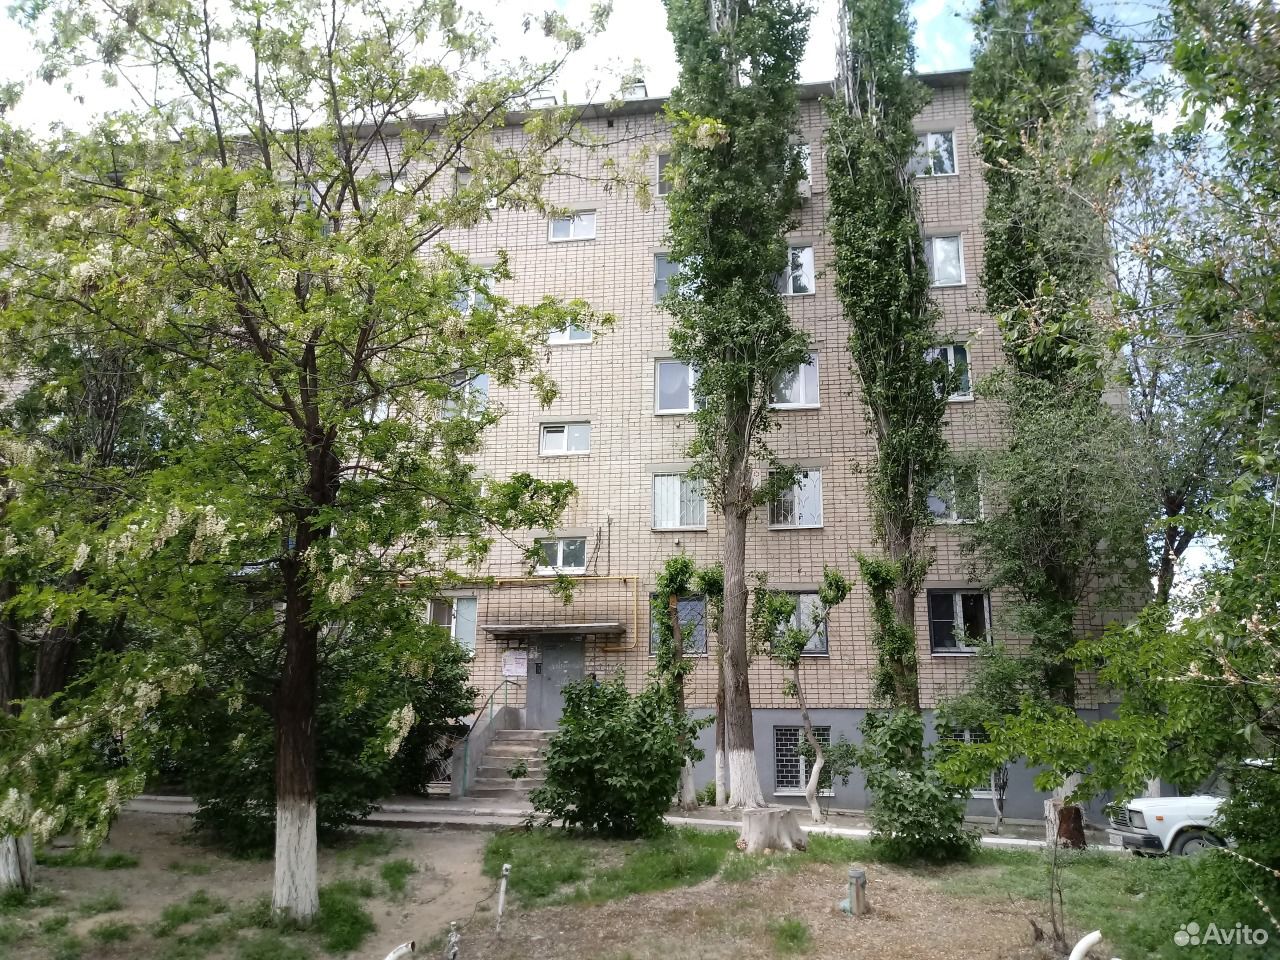 Университетский проспект 19 Волгоград